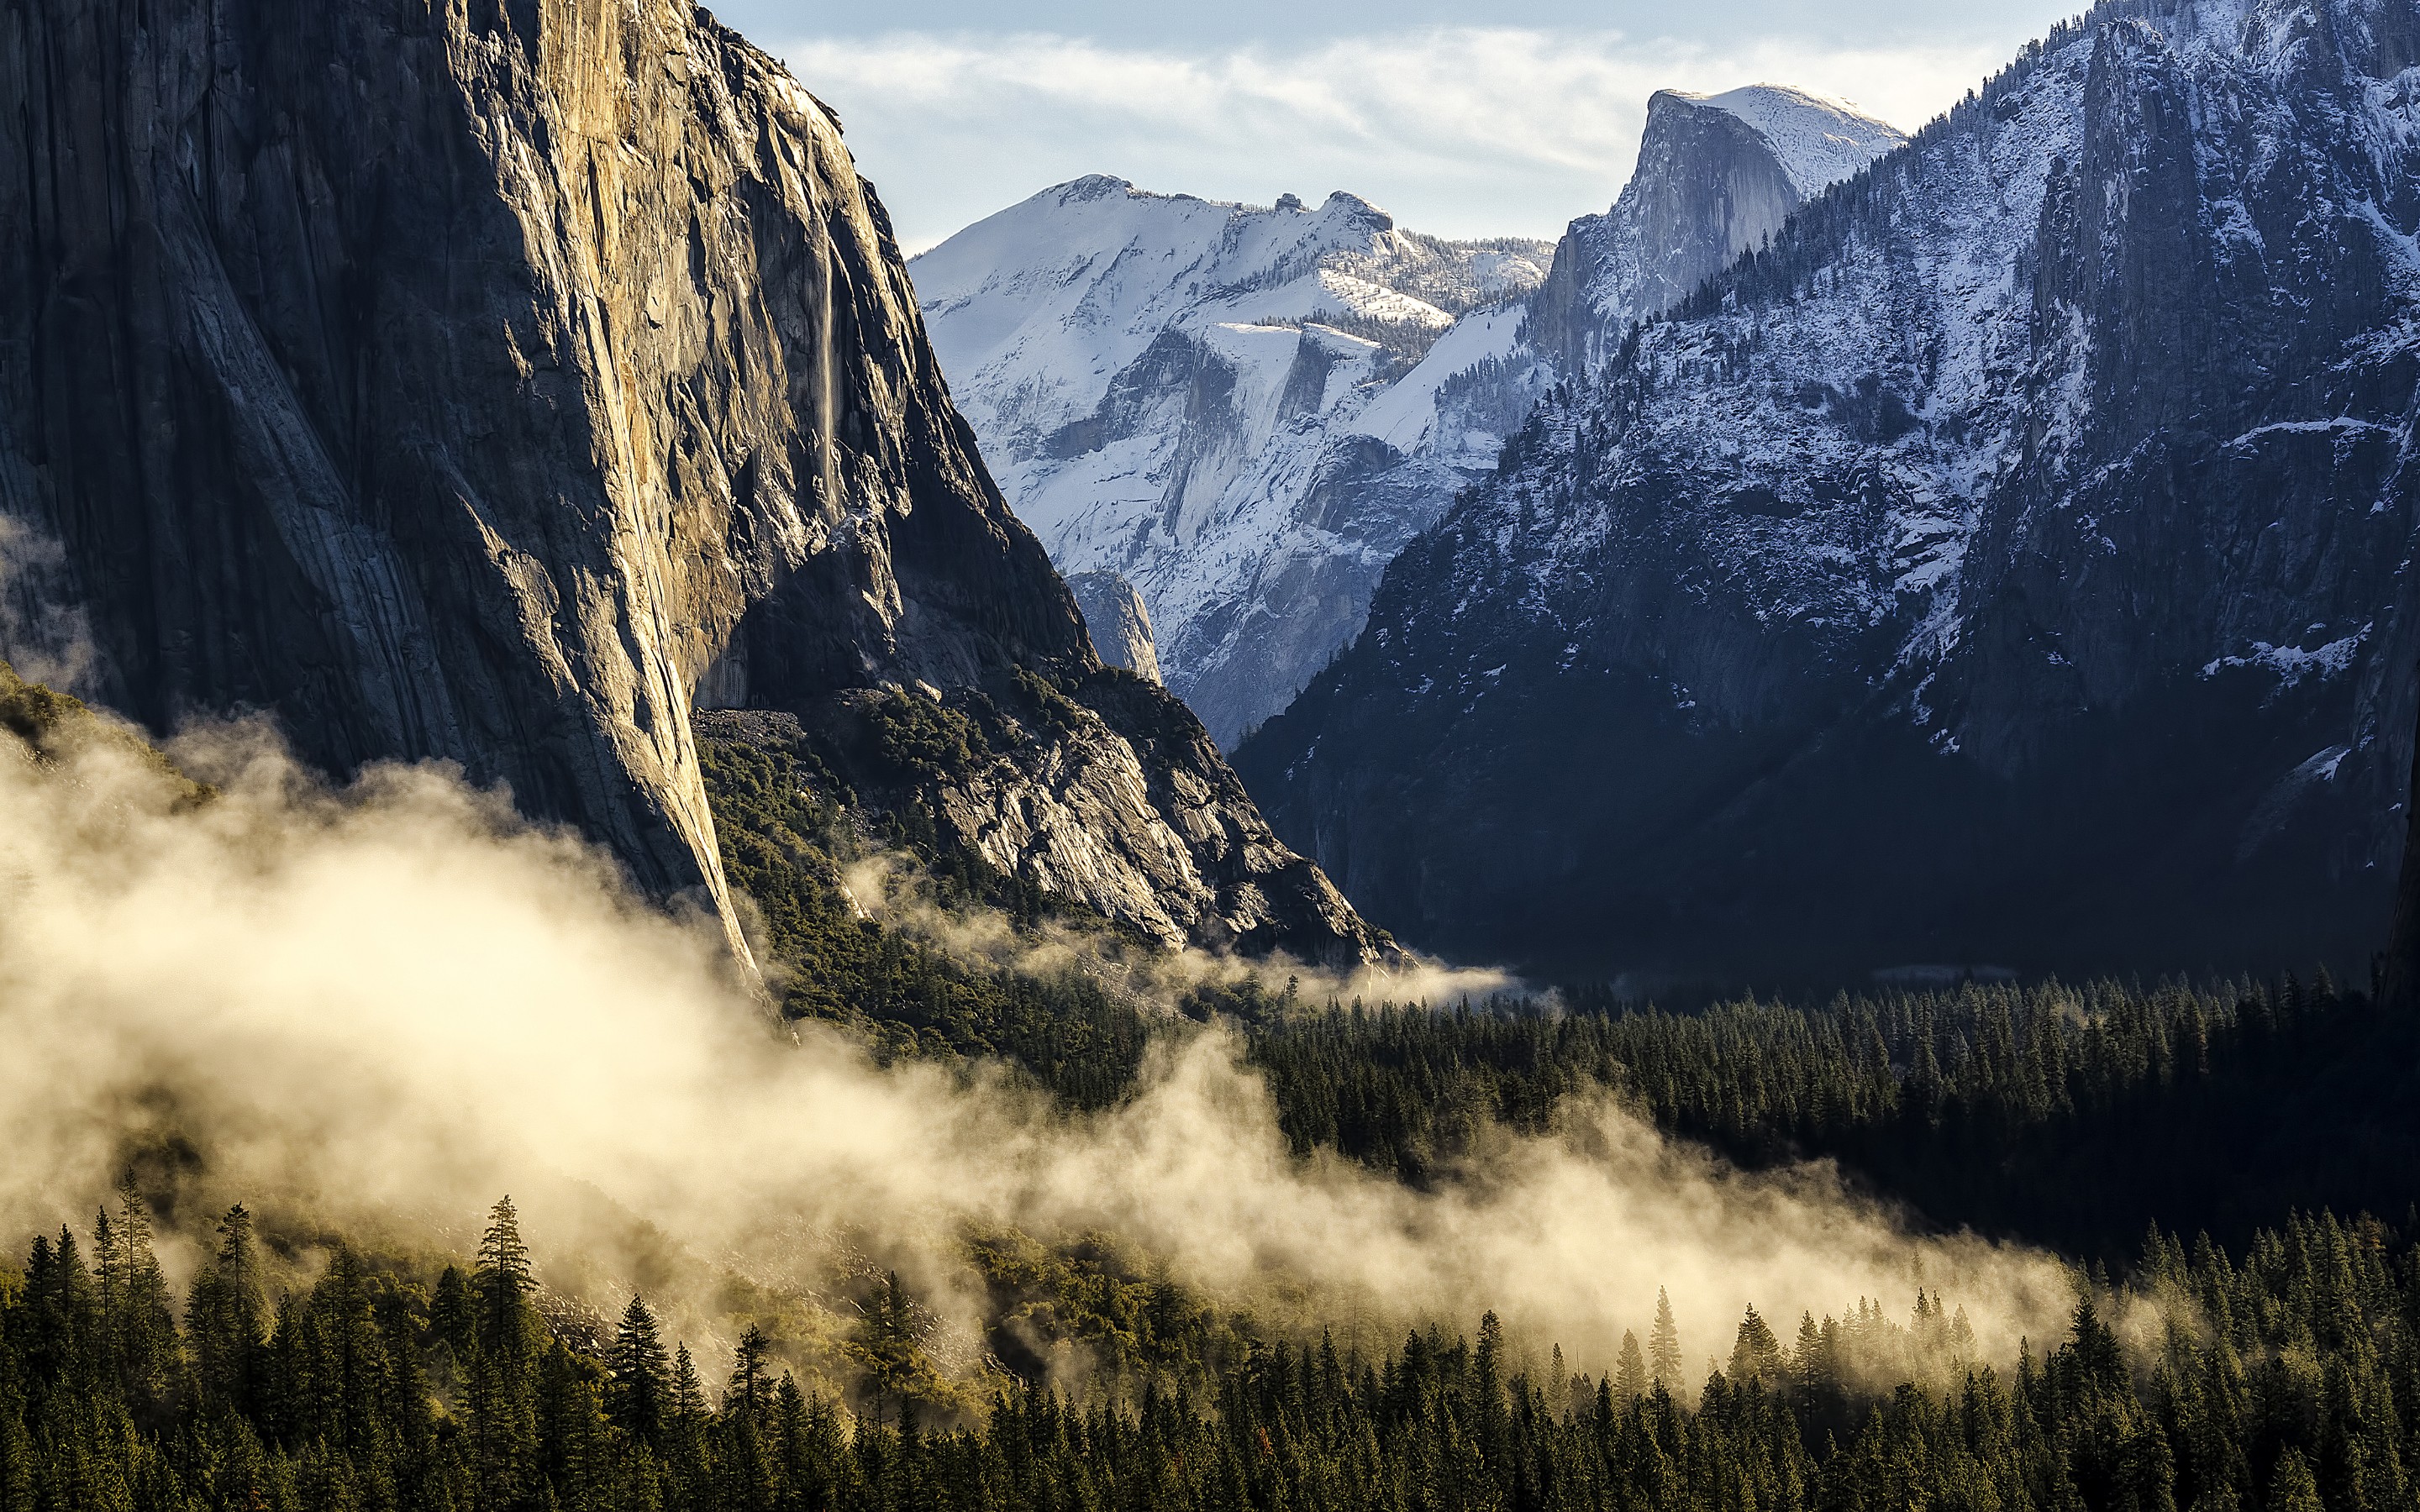 General 2880x1800 Yosemite National Park mountains mist forest morning nature landscape USA